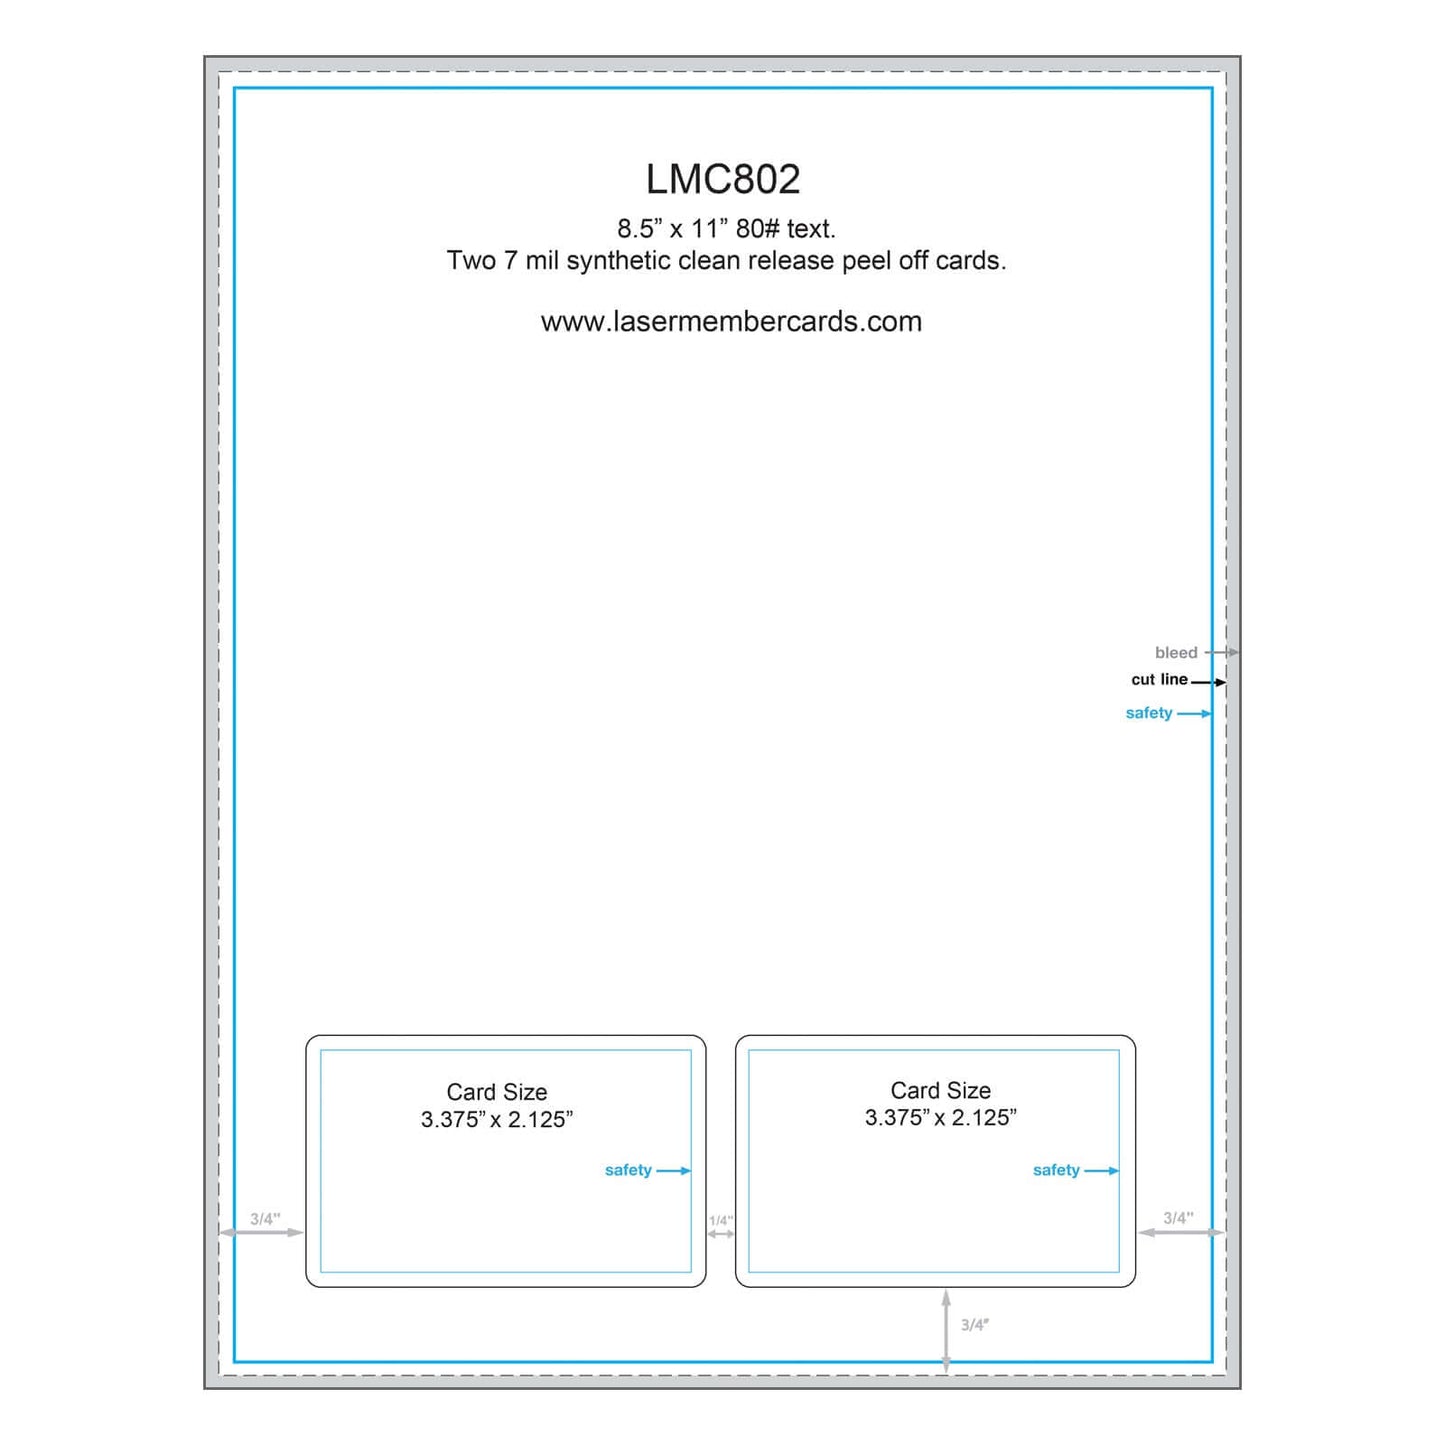 LMC802 Laser Membership Cards